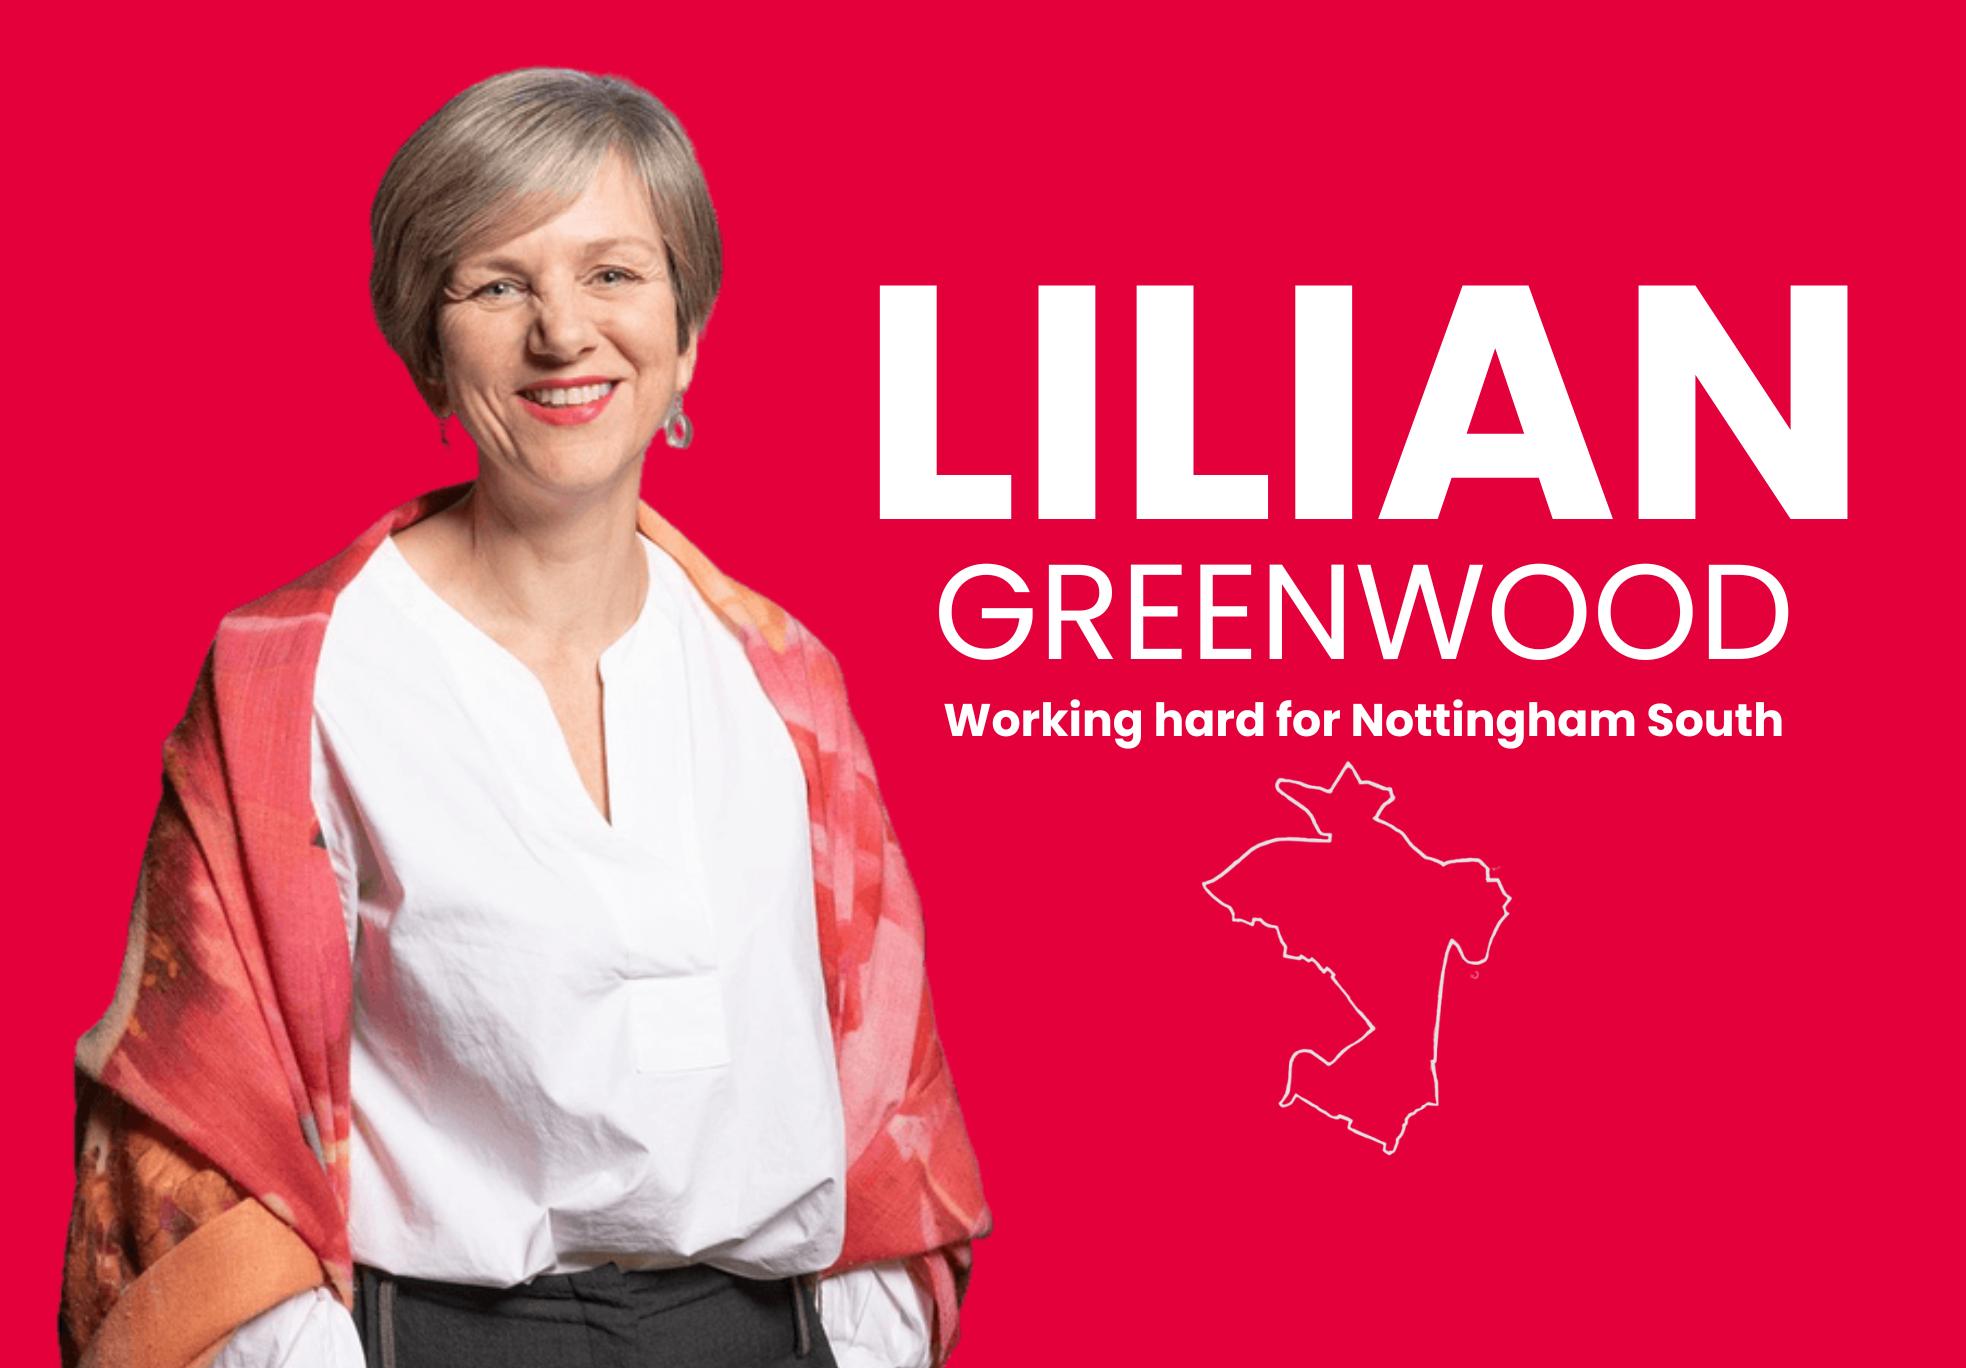 Lilian Greenwood MP